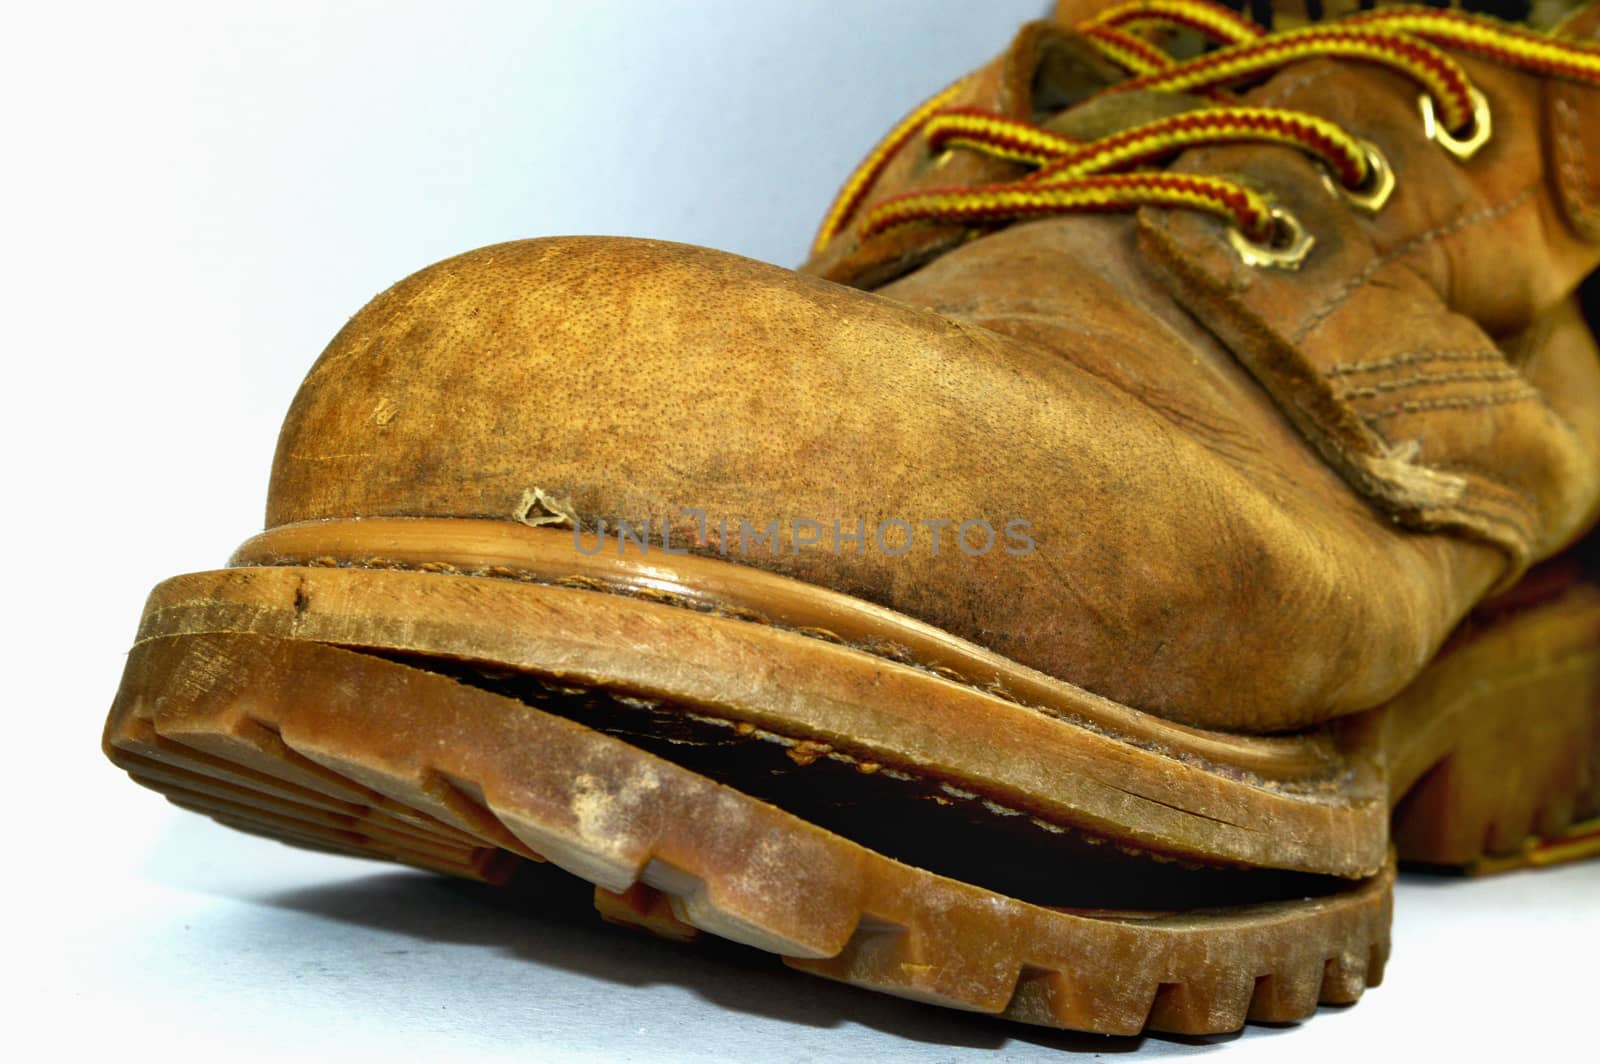 Old broken shoe by fxmdk